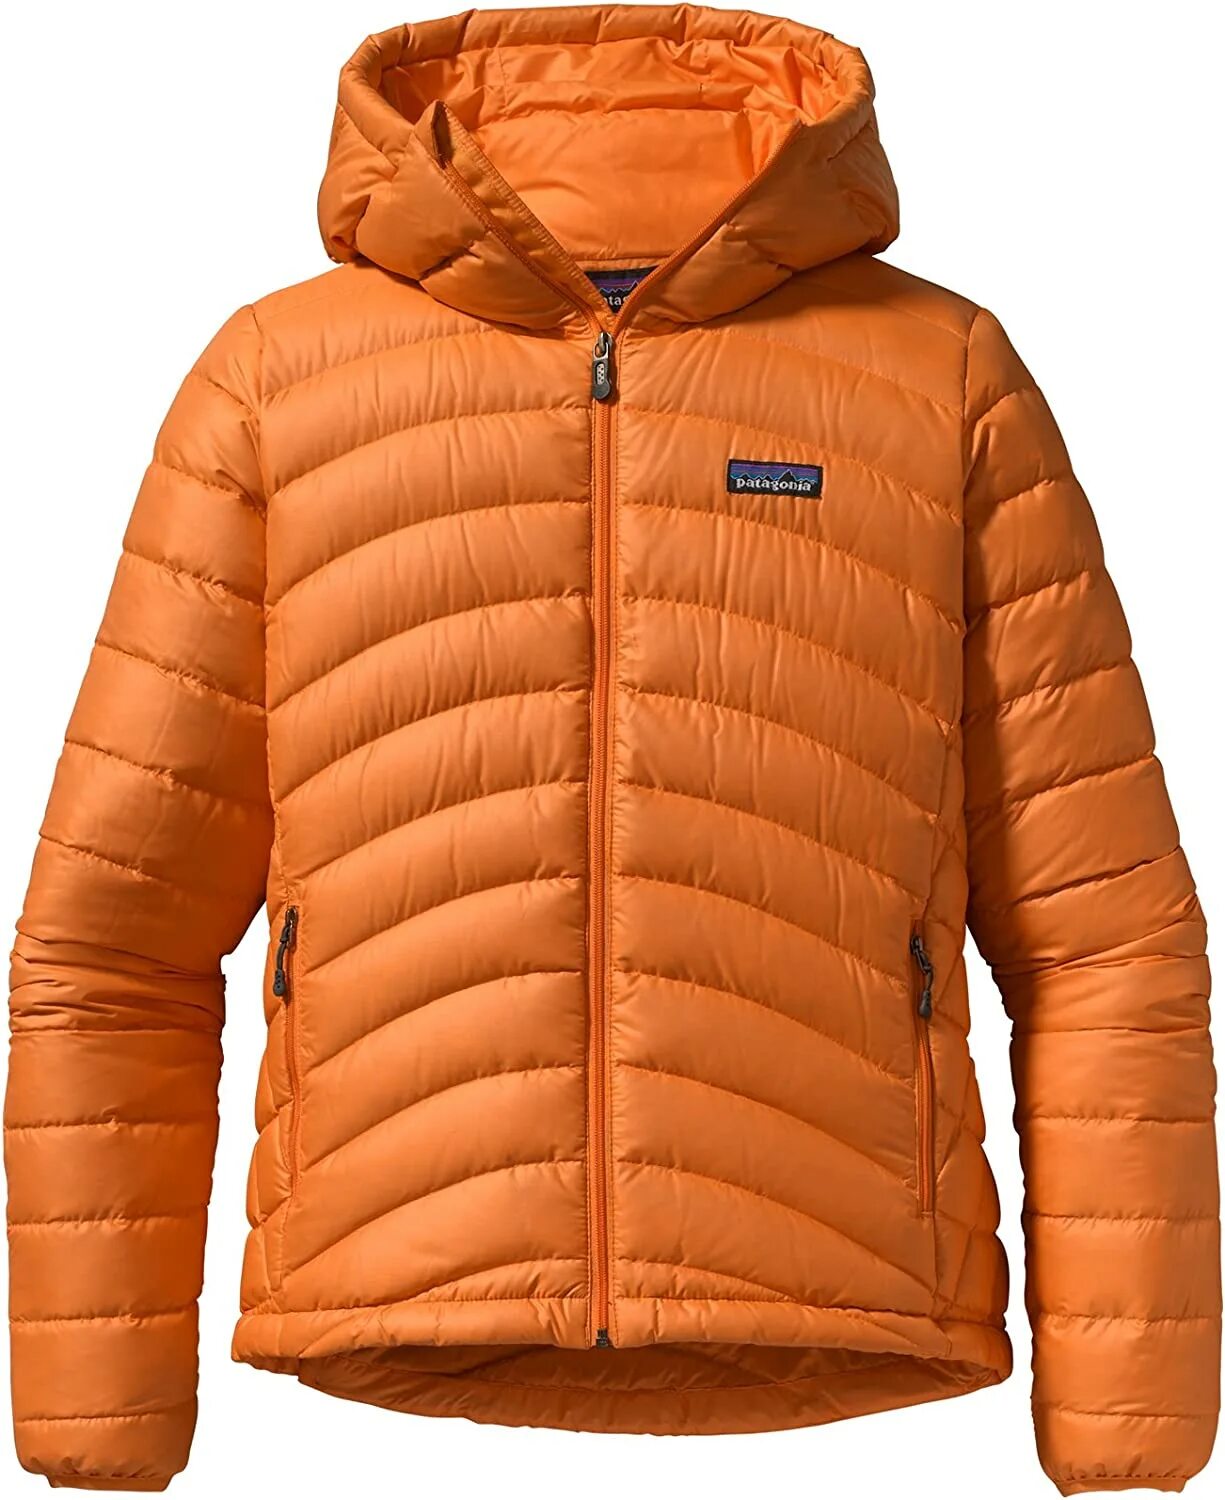 Оранжевый пуховик Patagonia. Оранжевая куртка. Warm the World куртка. Красная куртка Patagonia.